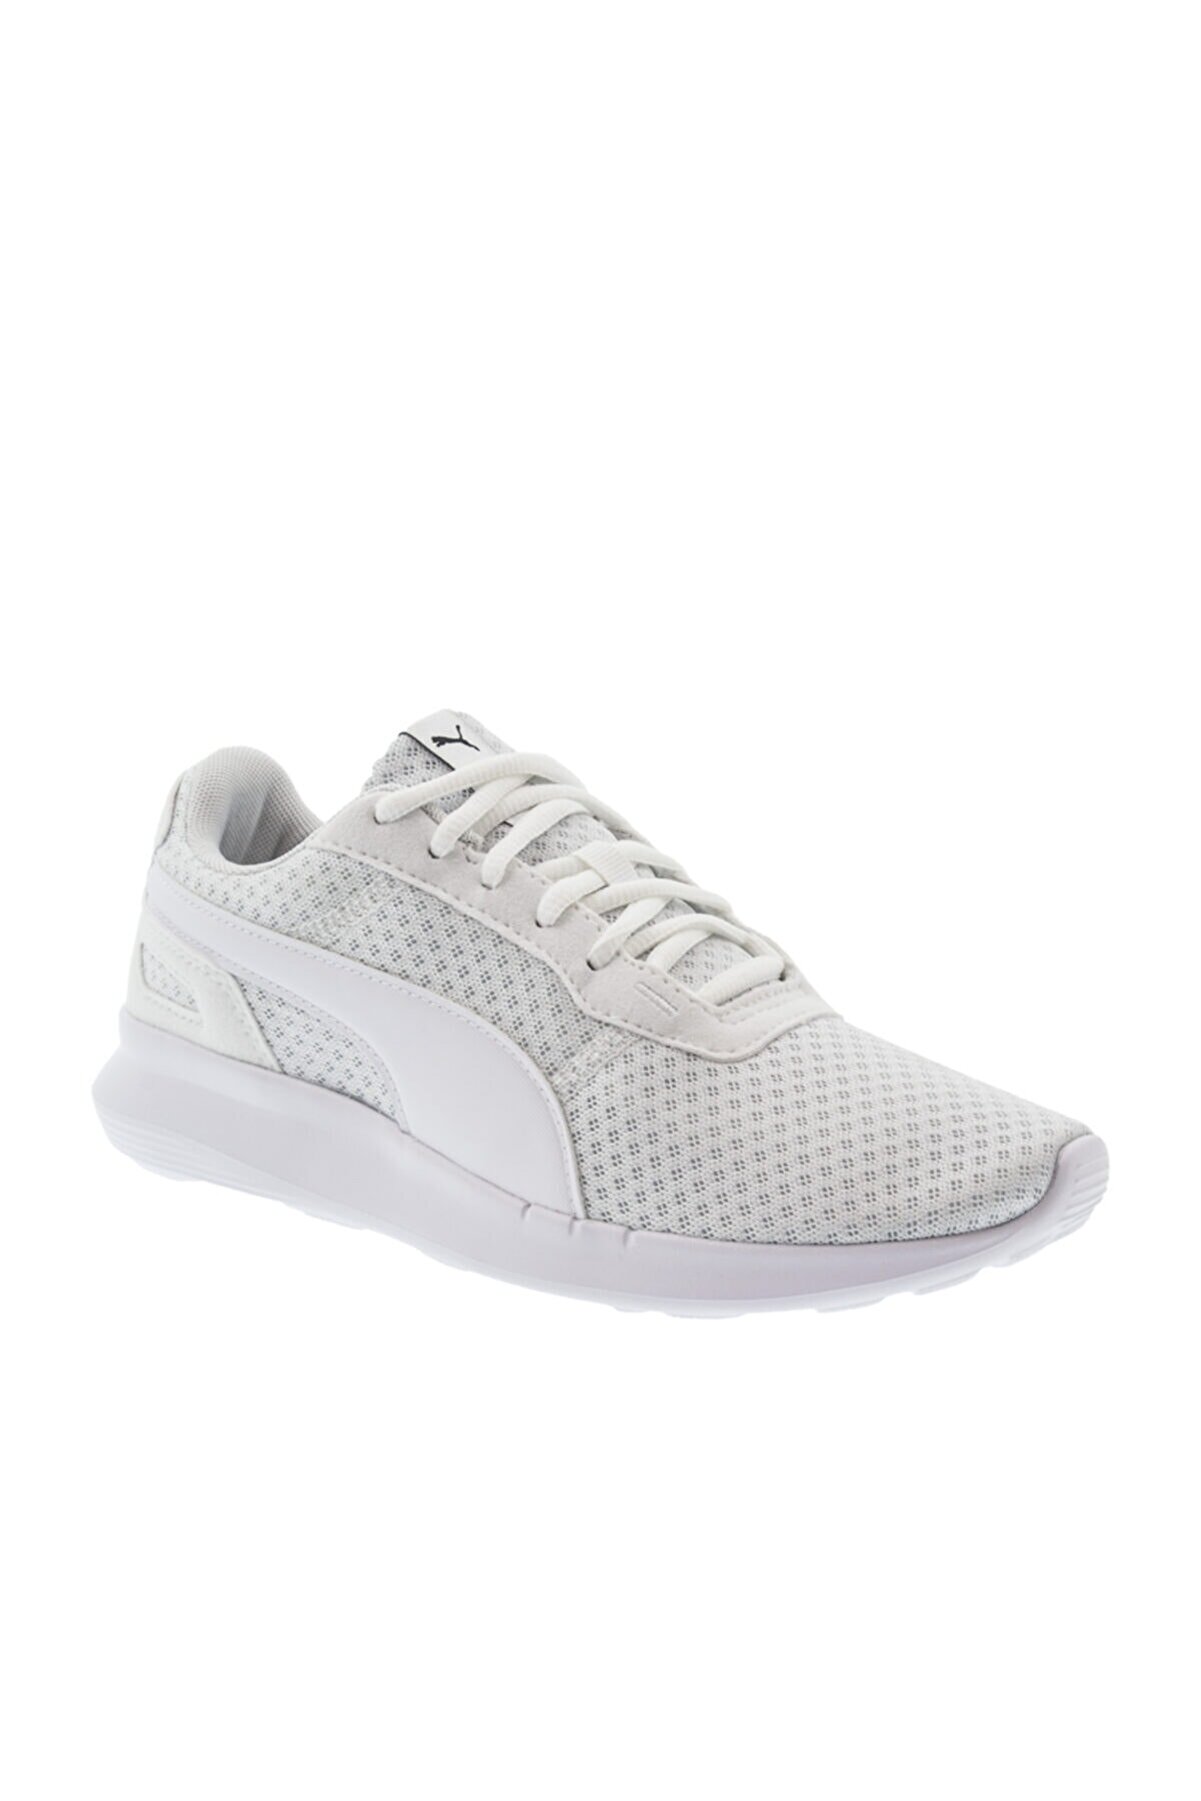 Puma St Activate Beyaz Unisex Sneaker Ayakkabı 100415216